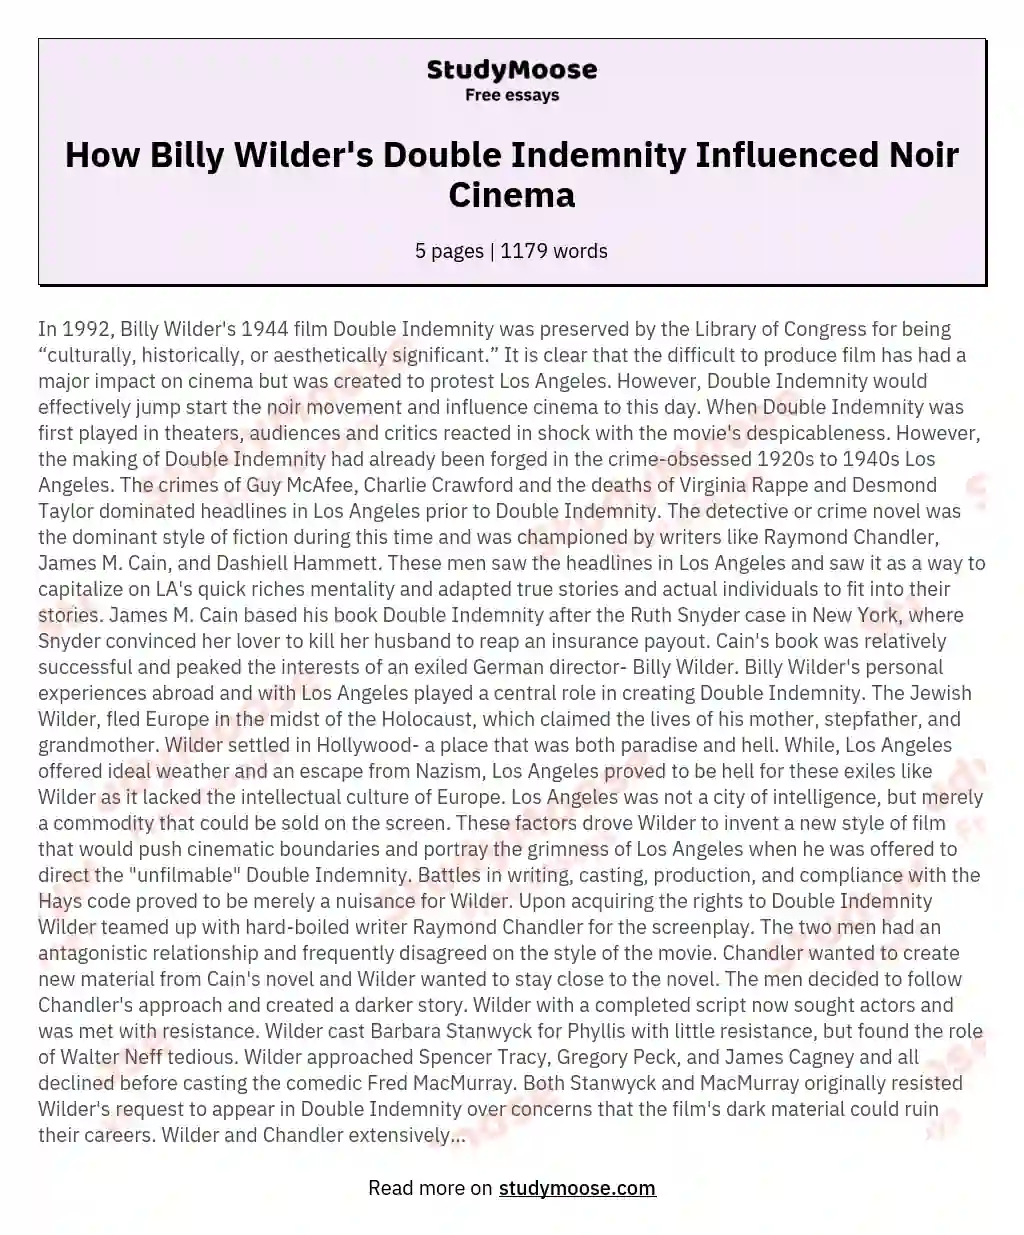 How Billy Wilder's Double Indemnity Influenced Noir Cinema essay